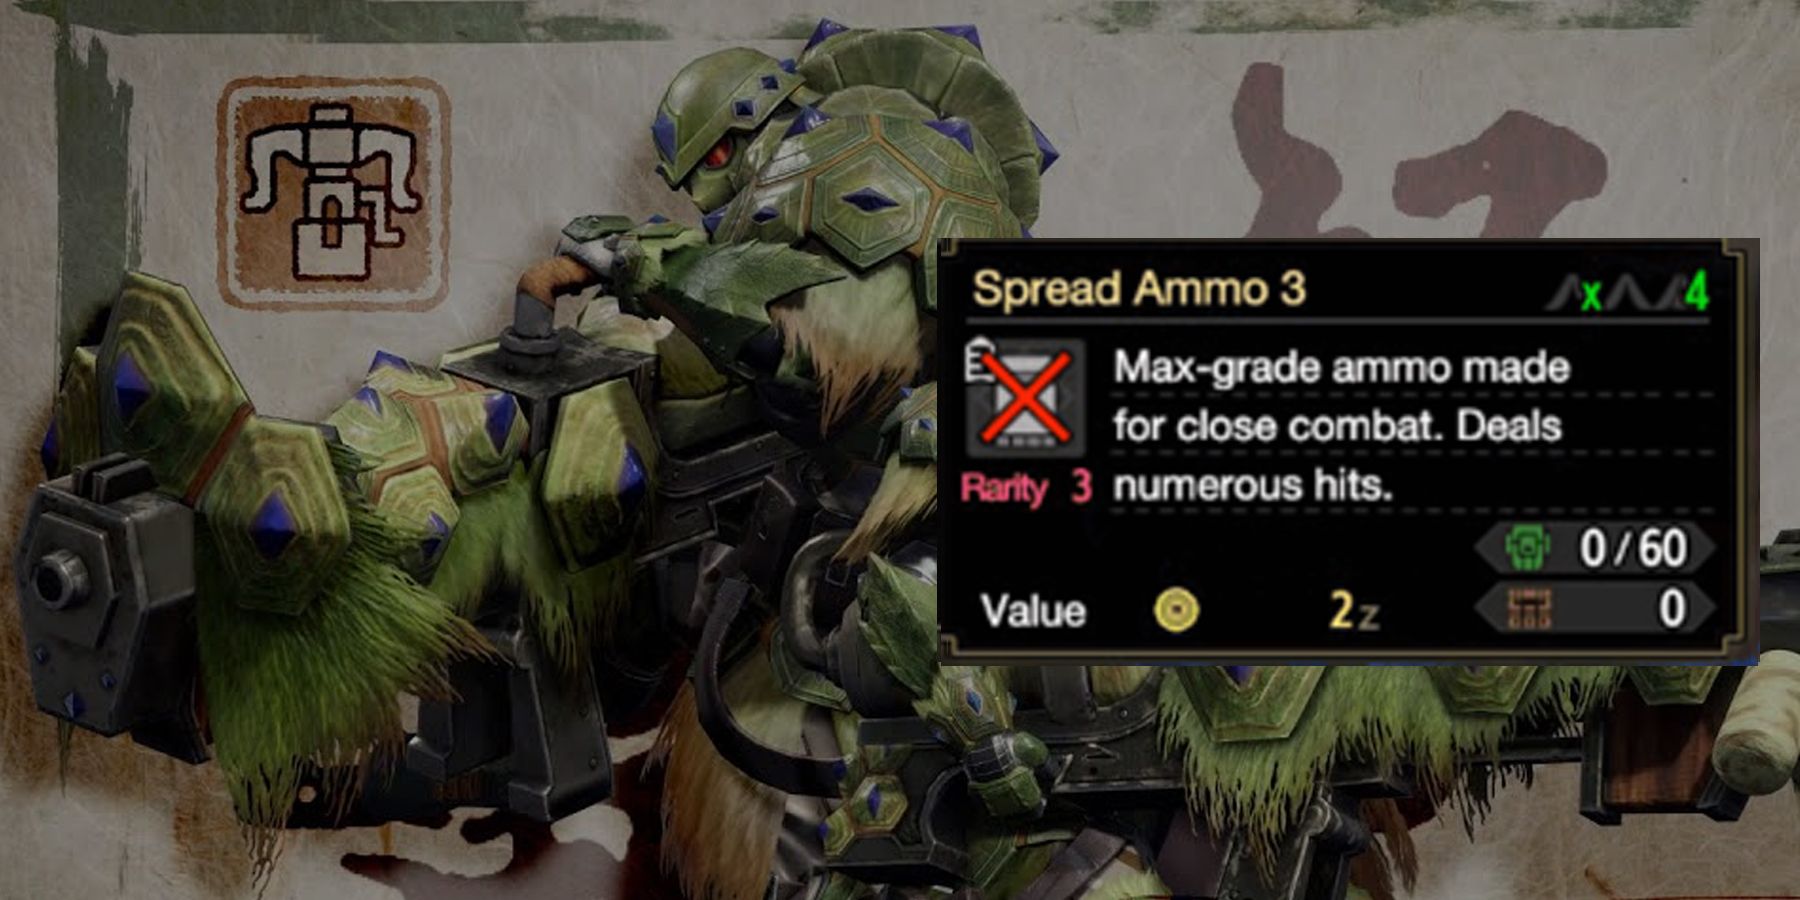 Spread Ammo 3